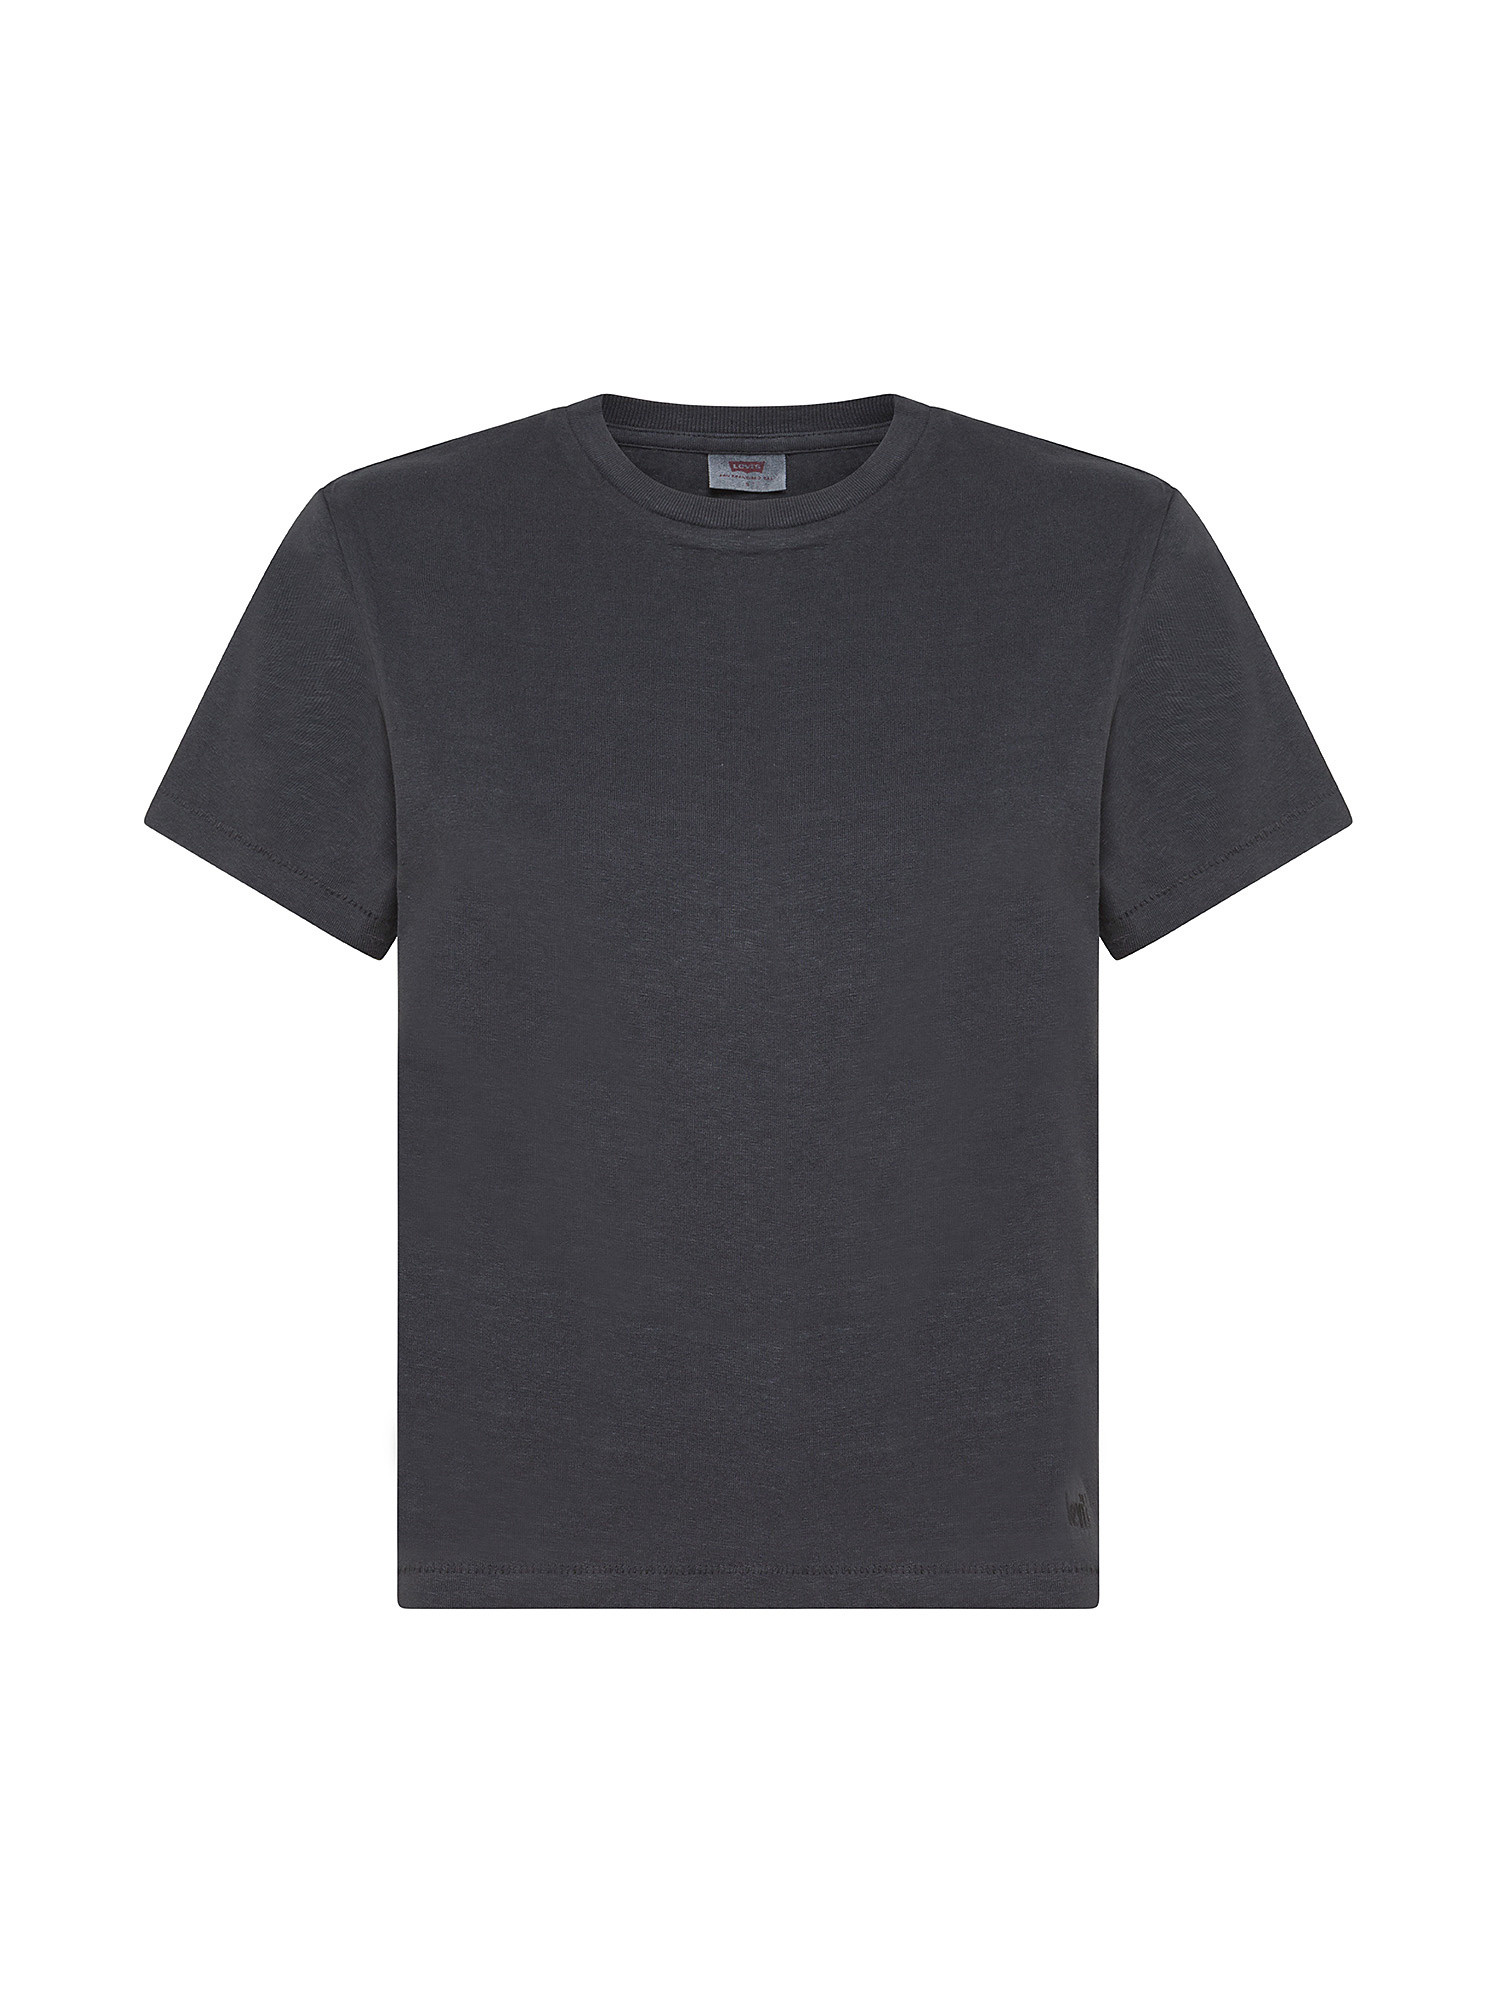 Levi's - classic fit t-shirt, Black, large image number 0